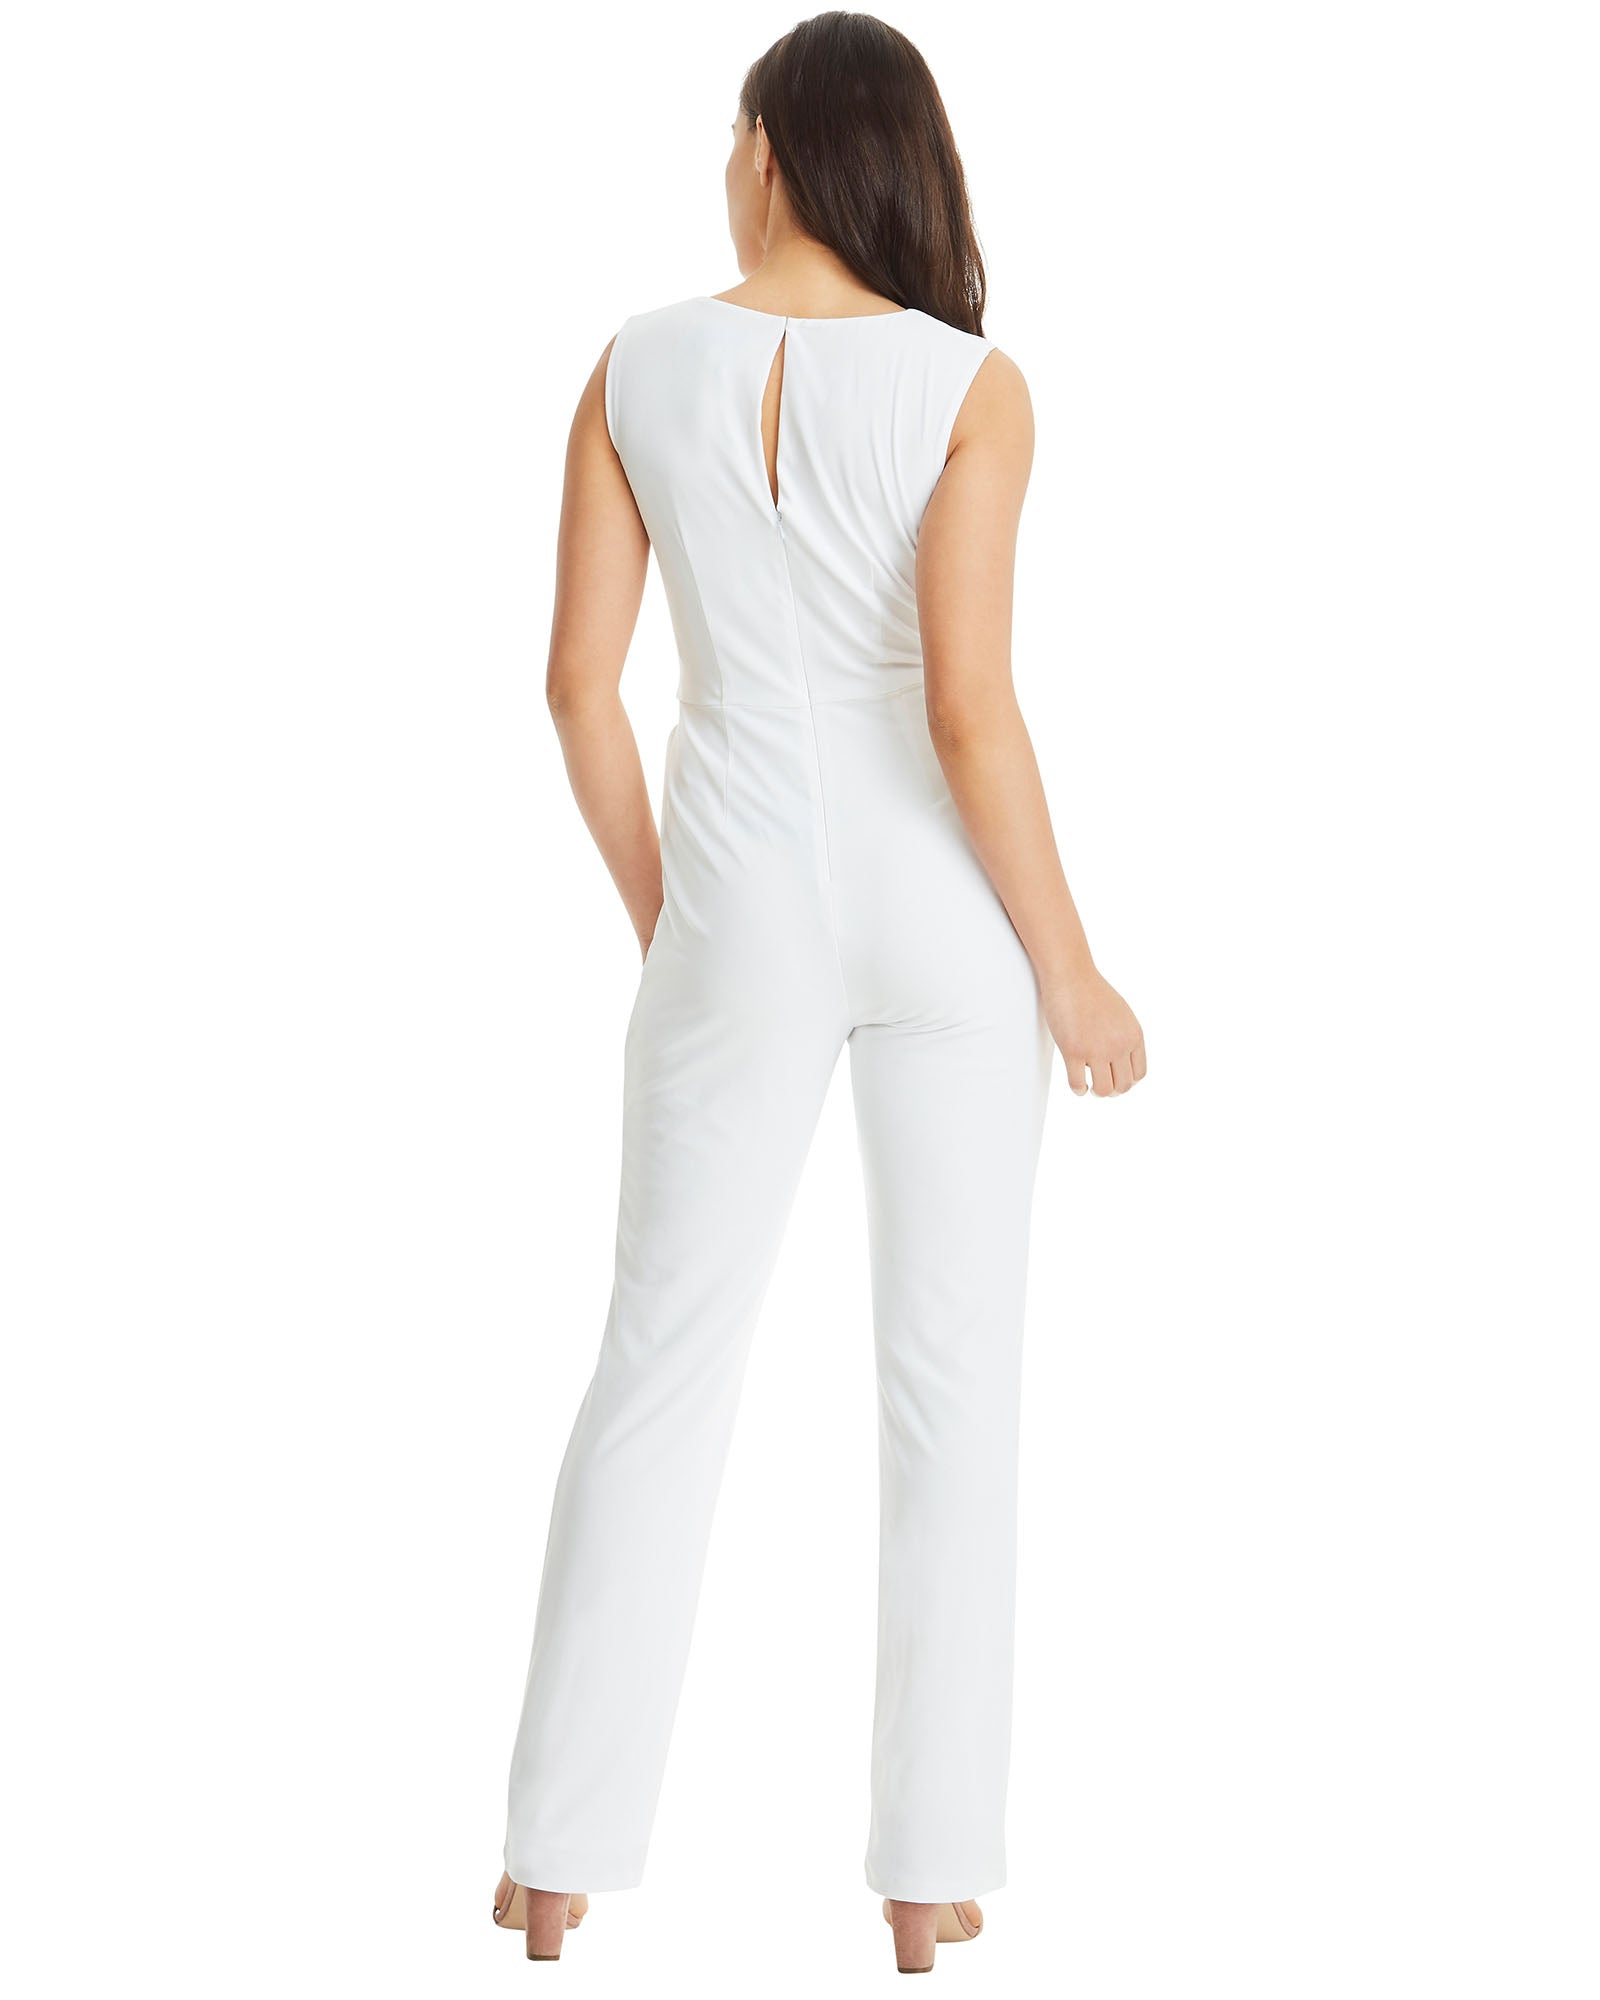 SKIVA V neck jumpsuit pantsuit straps white stretch jersey  fabric pockets zipper fully lined